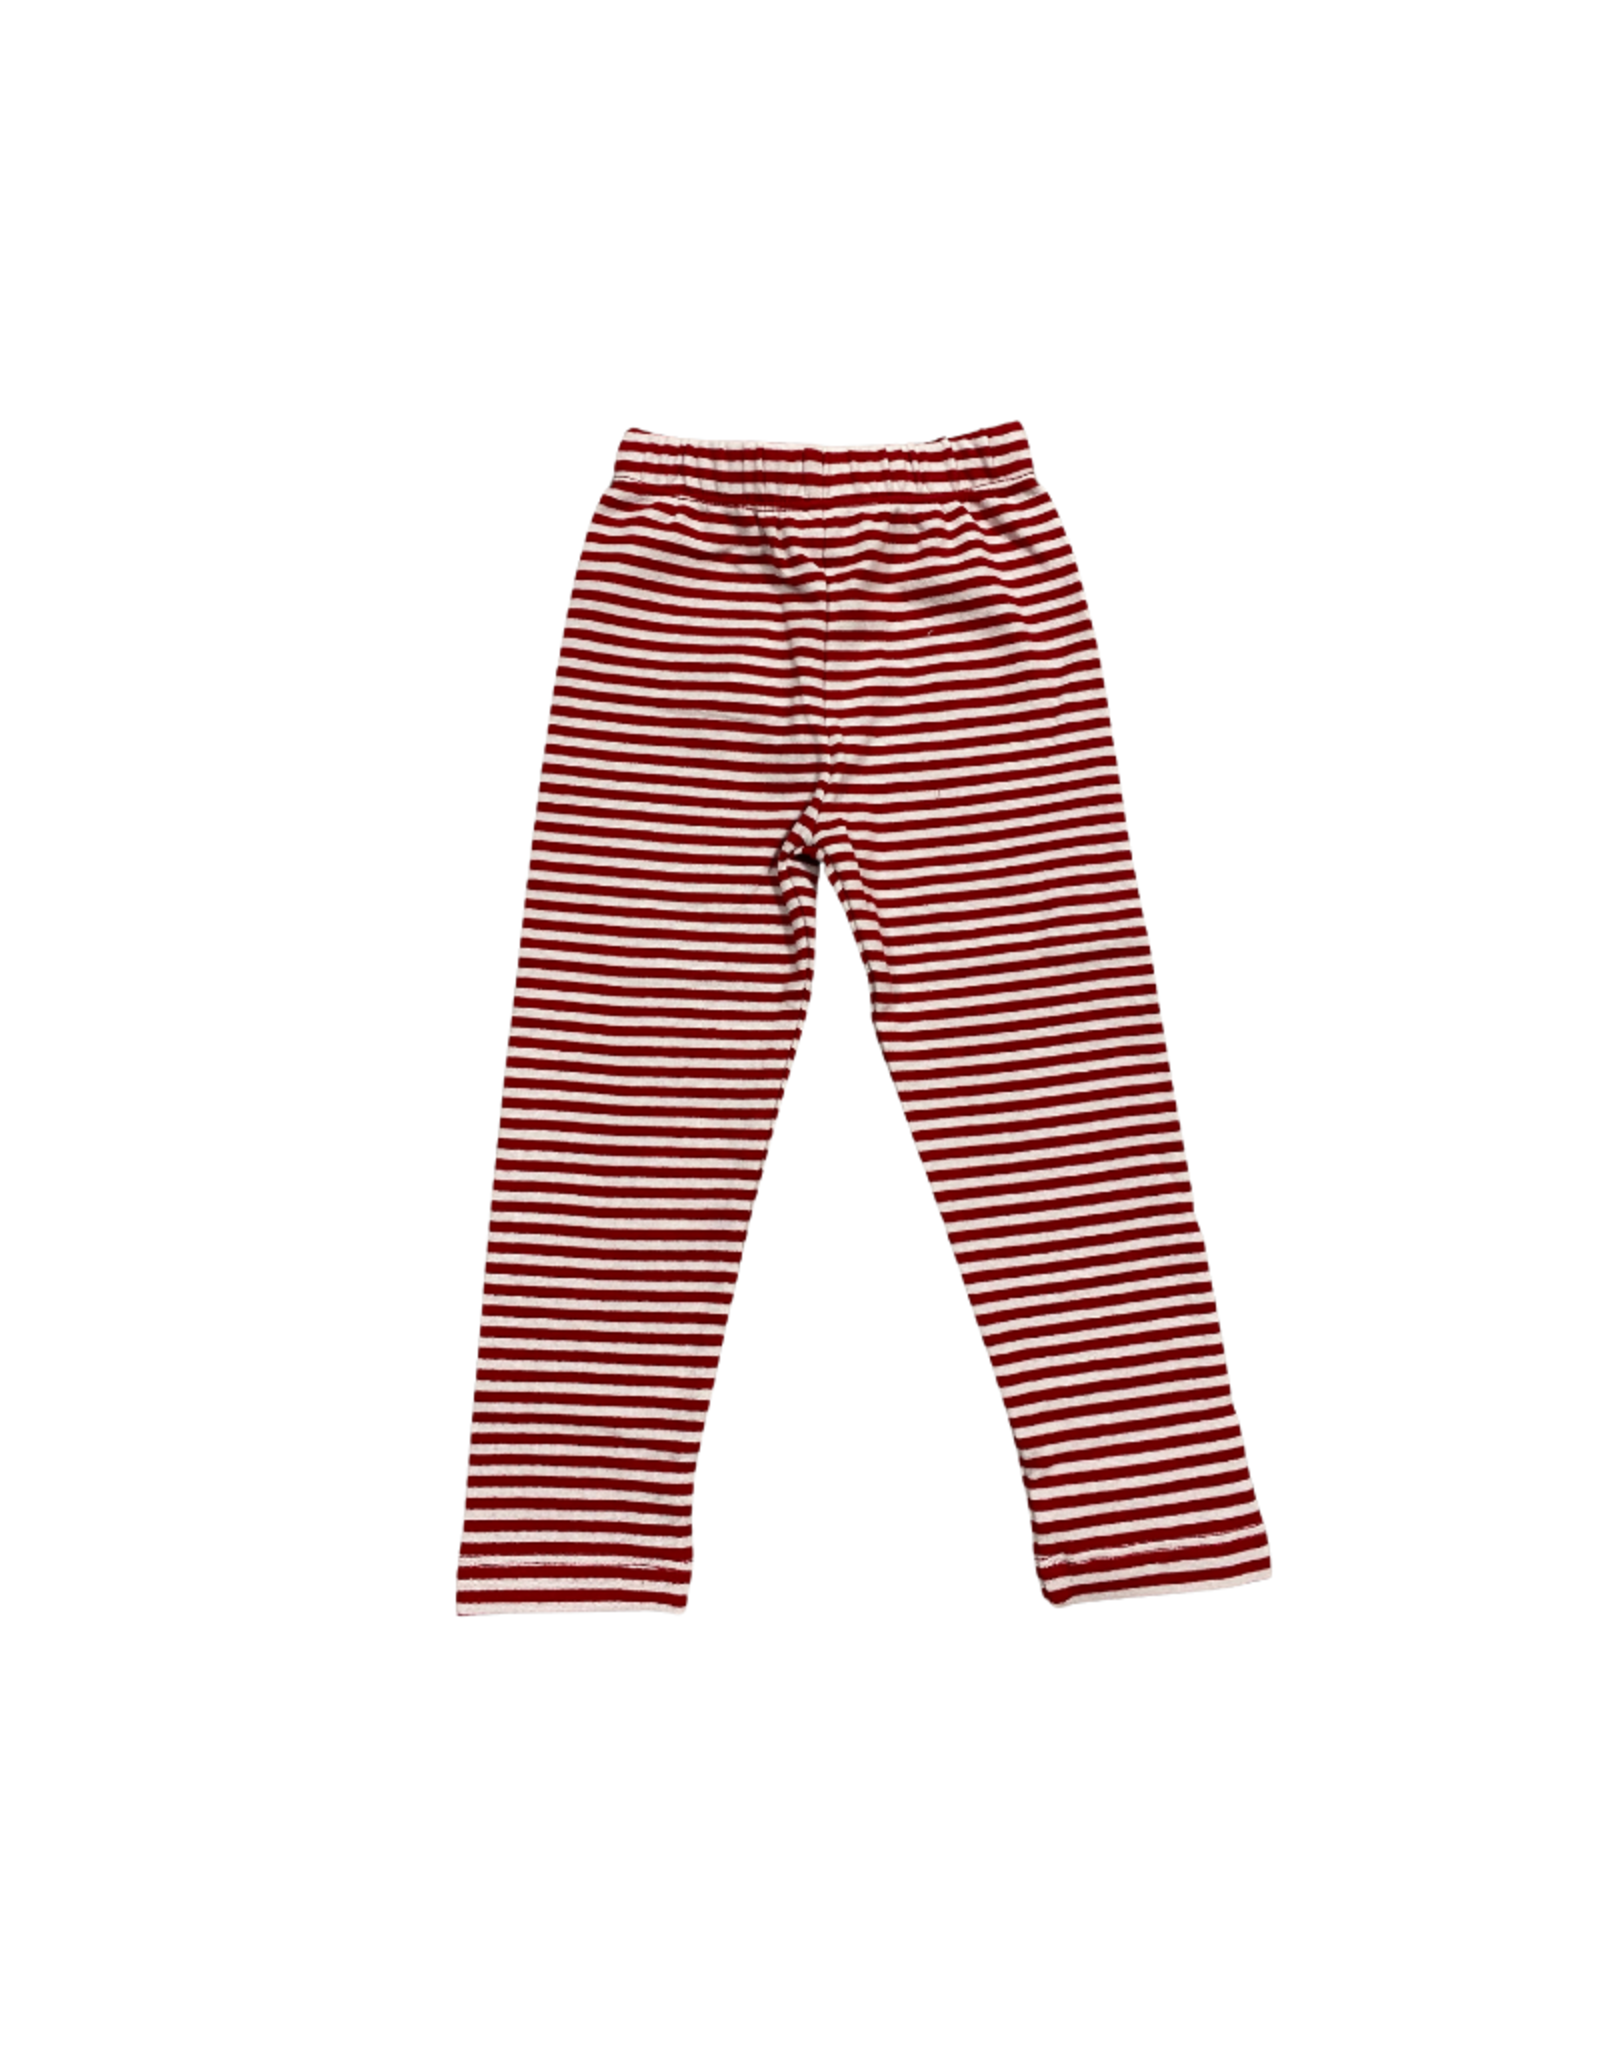 Straight Leggings Red and White Stripe - Mini Macarons Boutique